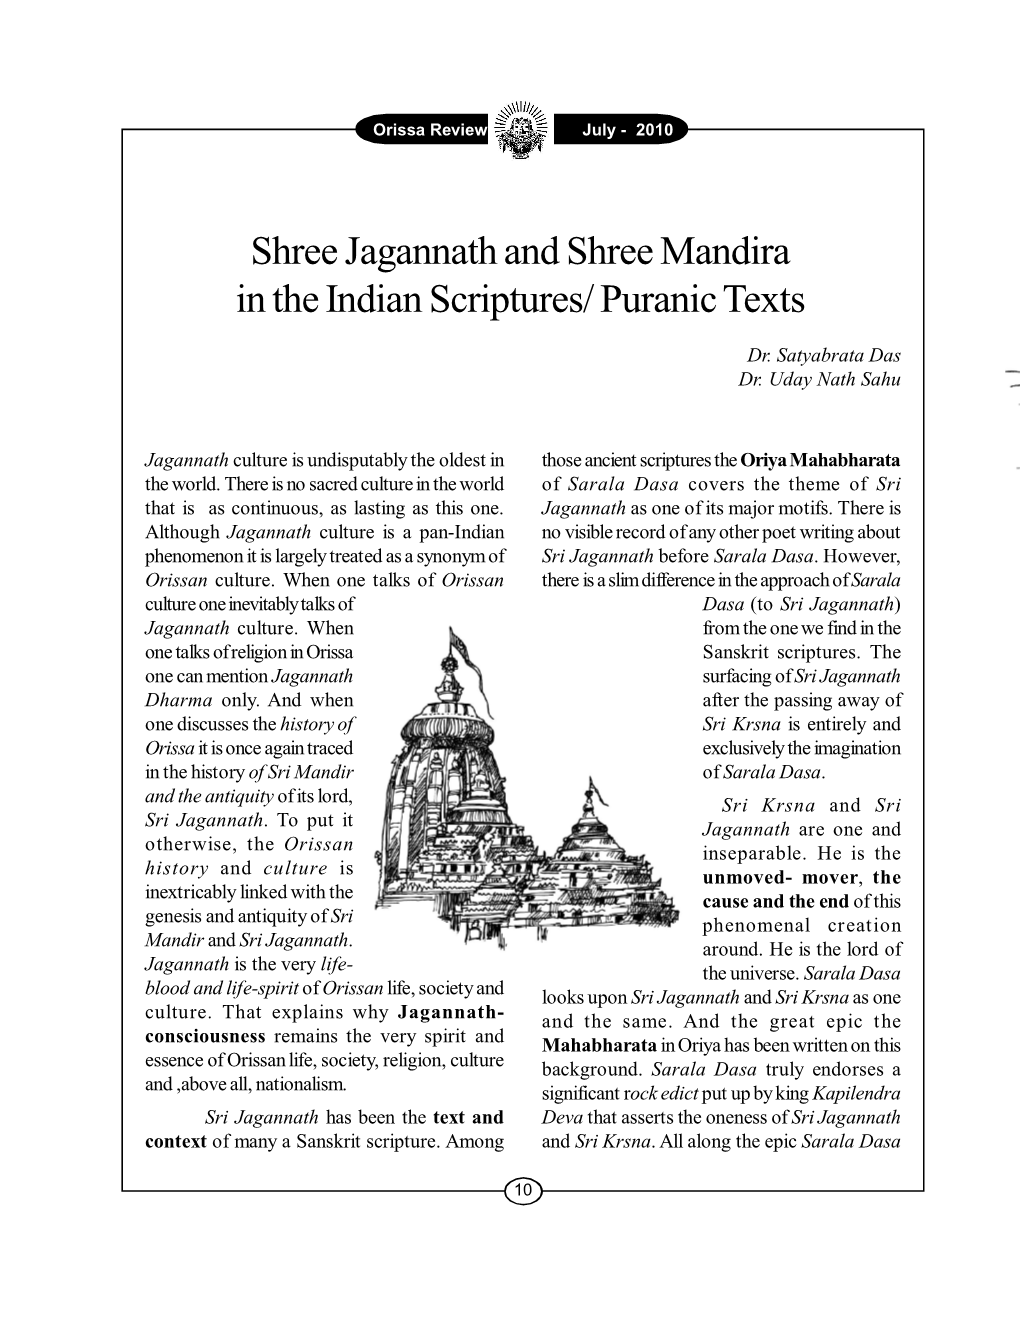 Shree Jagannath and Shree Mandira in the Indian Scriptures/ Puranic Texts